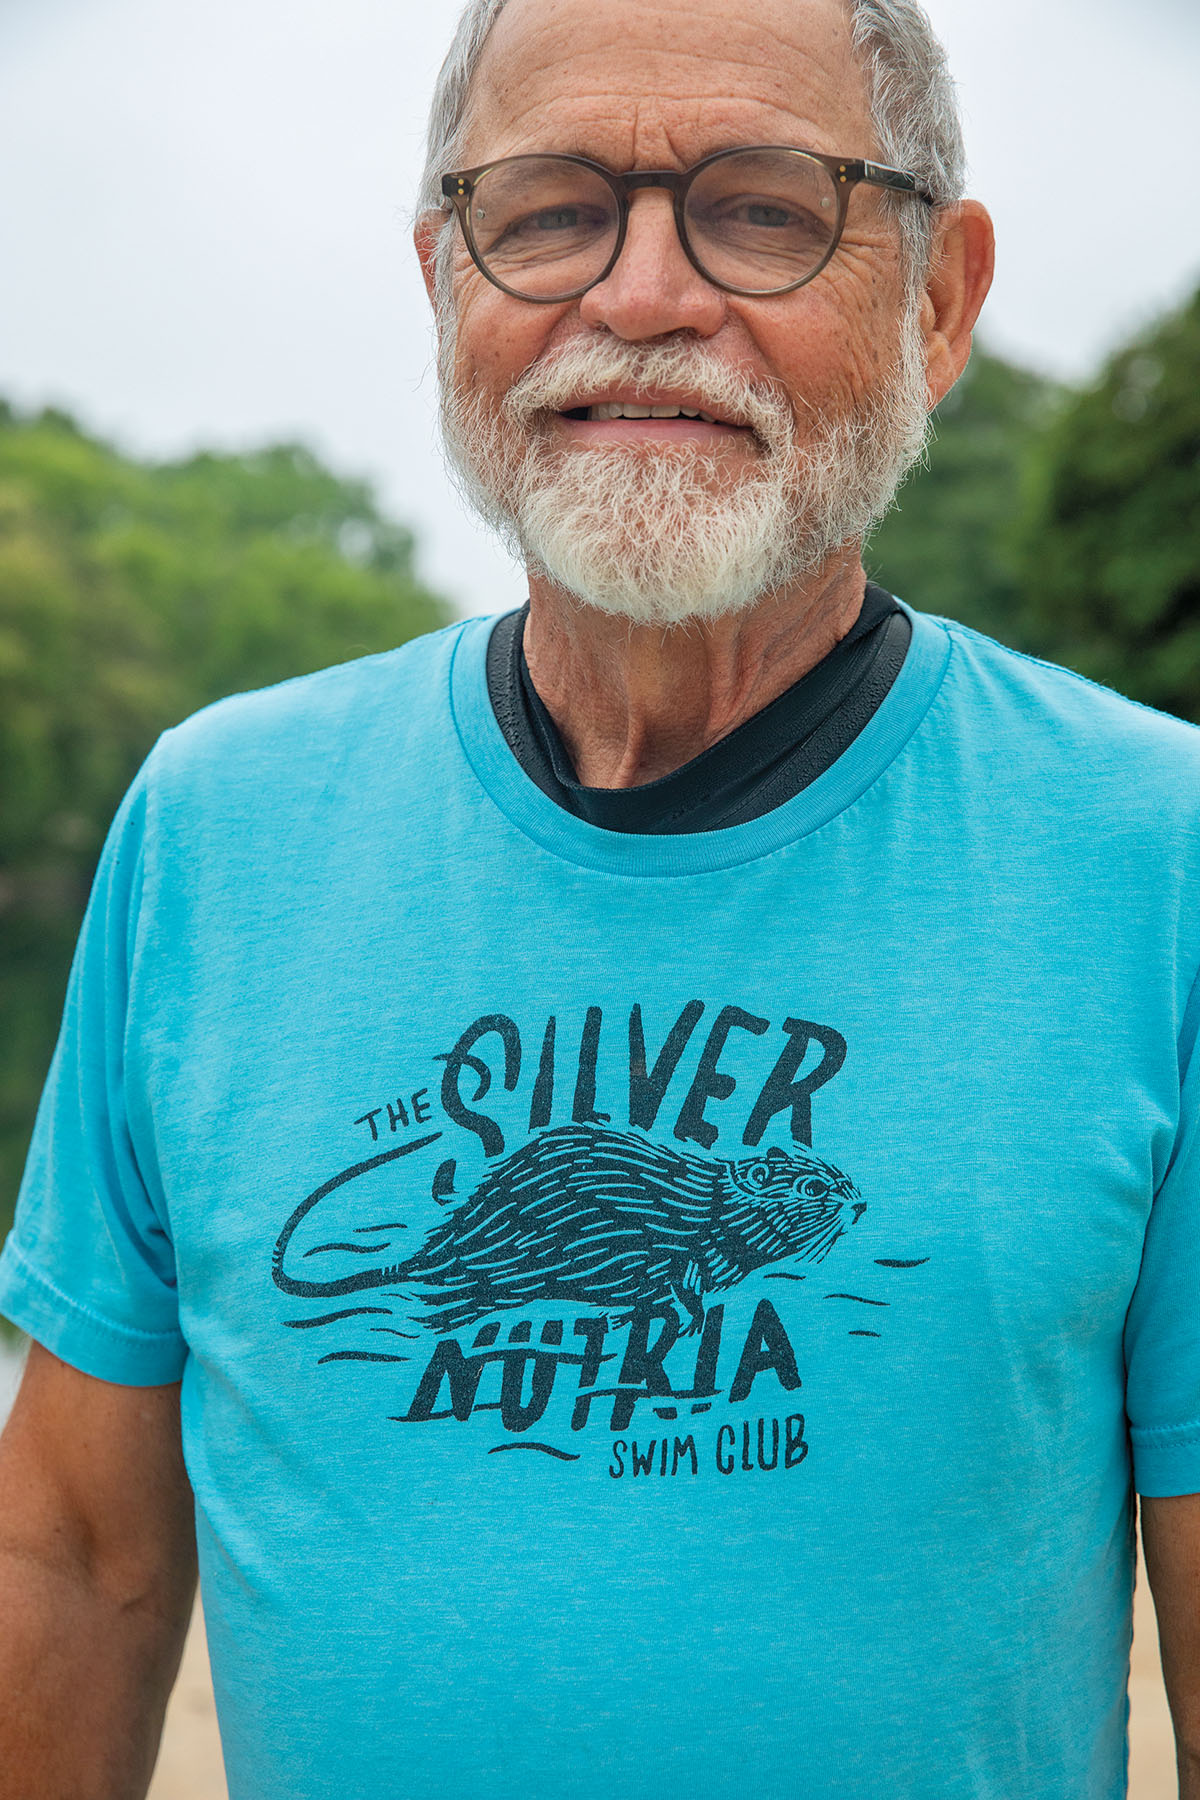 A man with a short white beard wears a teal shirt reading "Silver Nutria Swim Club"